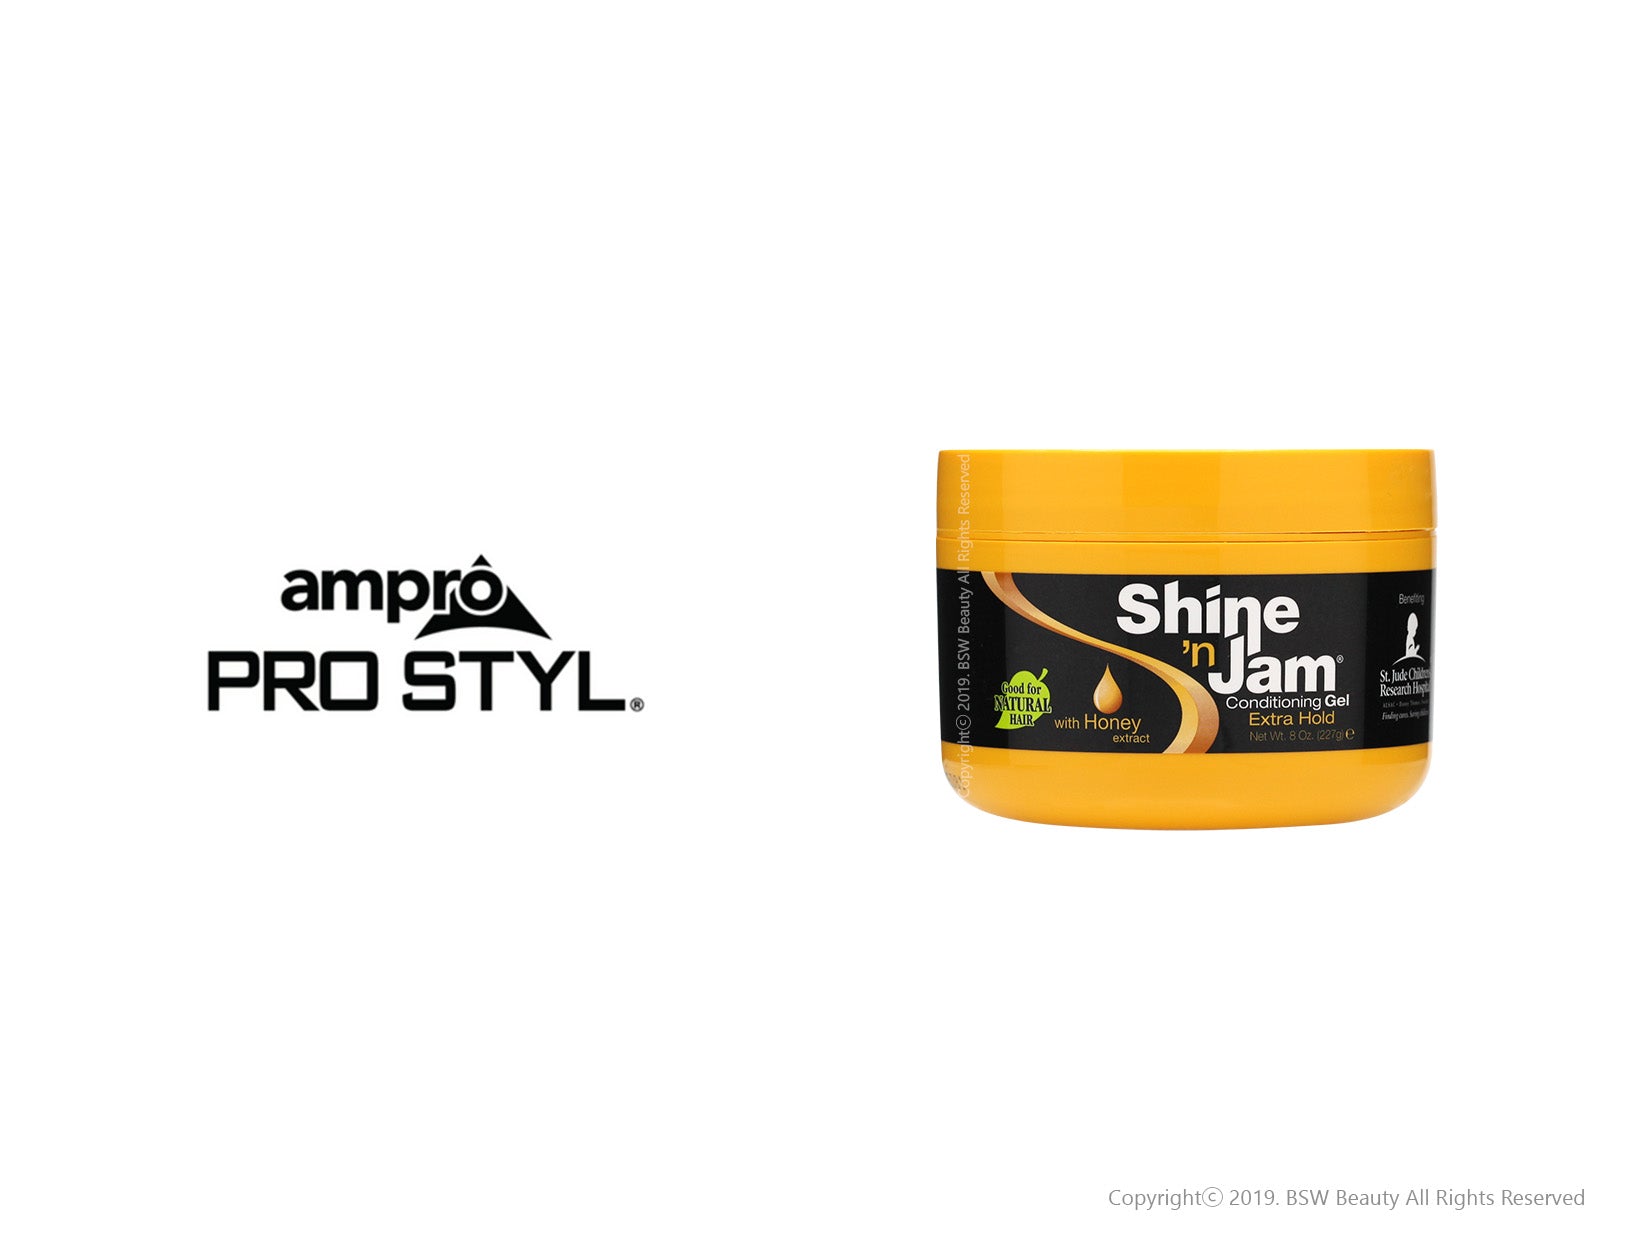 Ampro Shine 'n Jam Conditioning Gel Extra Hold (4 oz.)